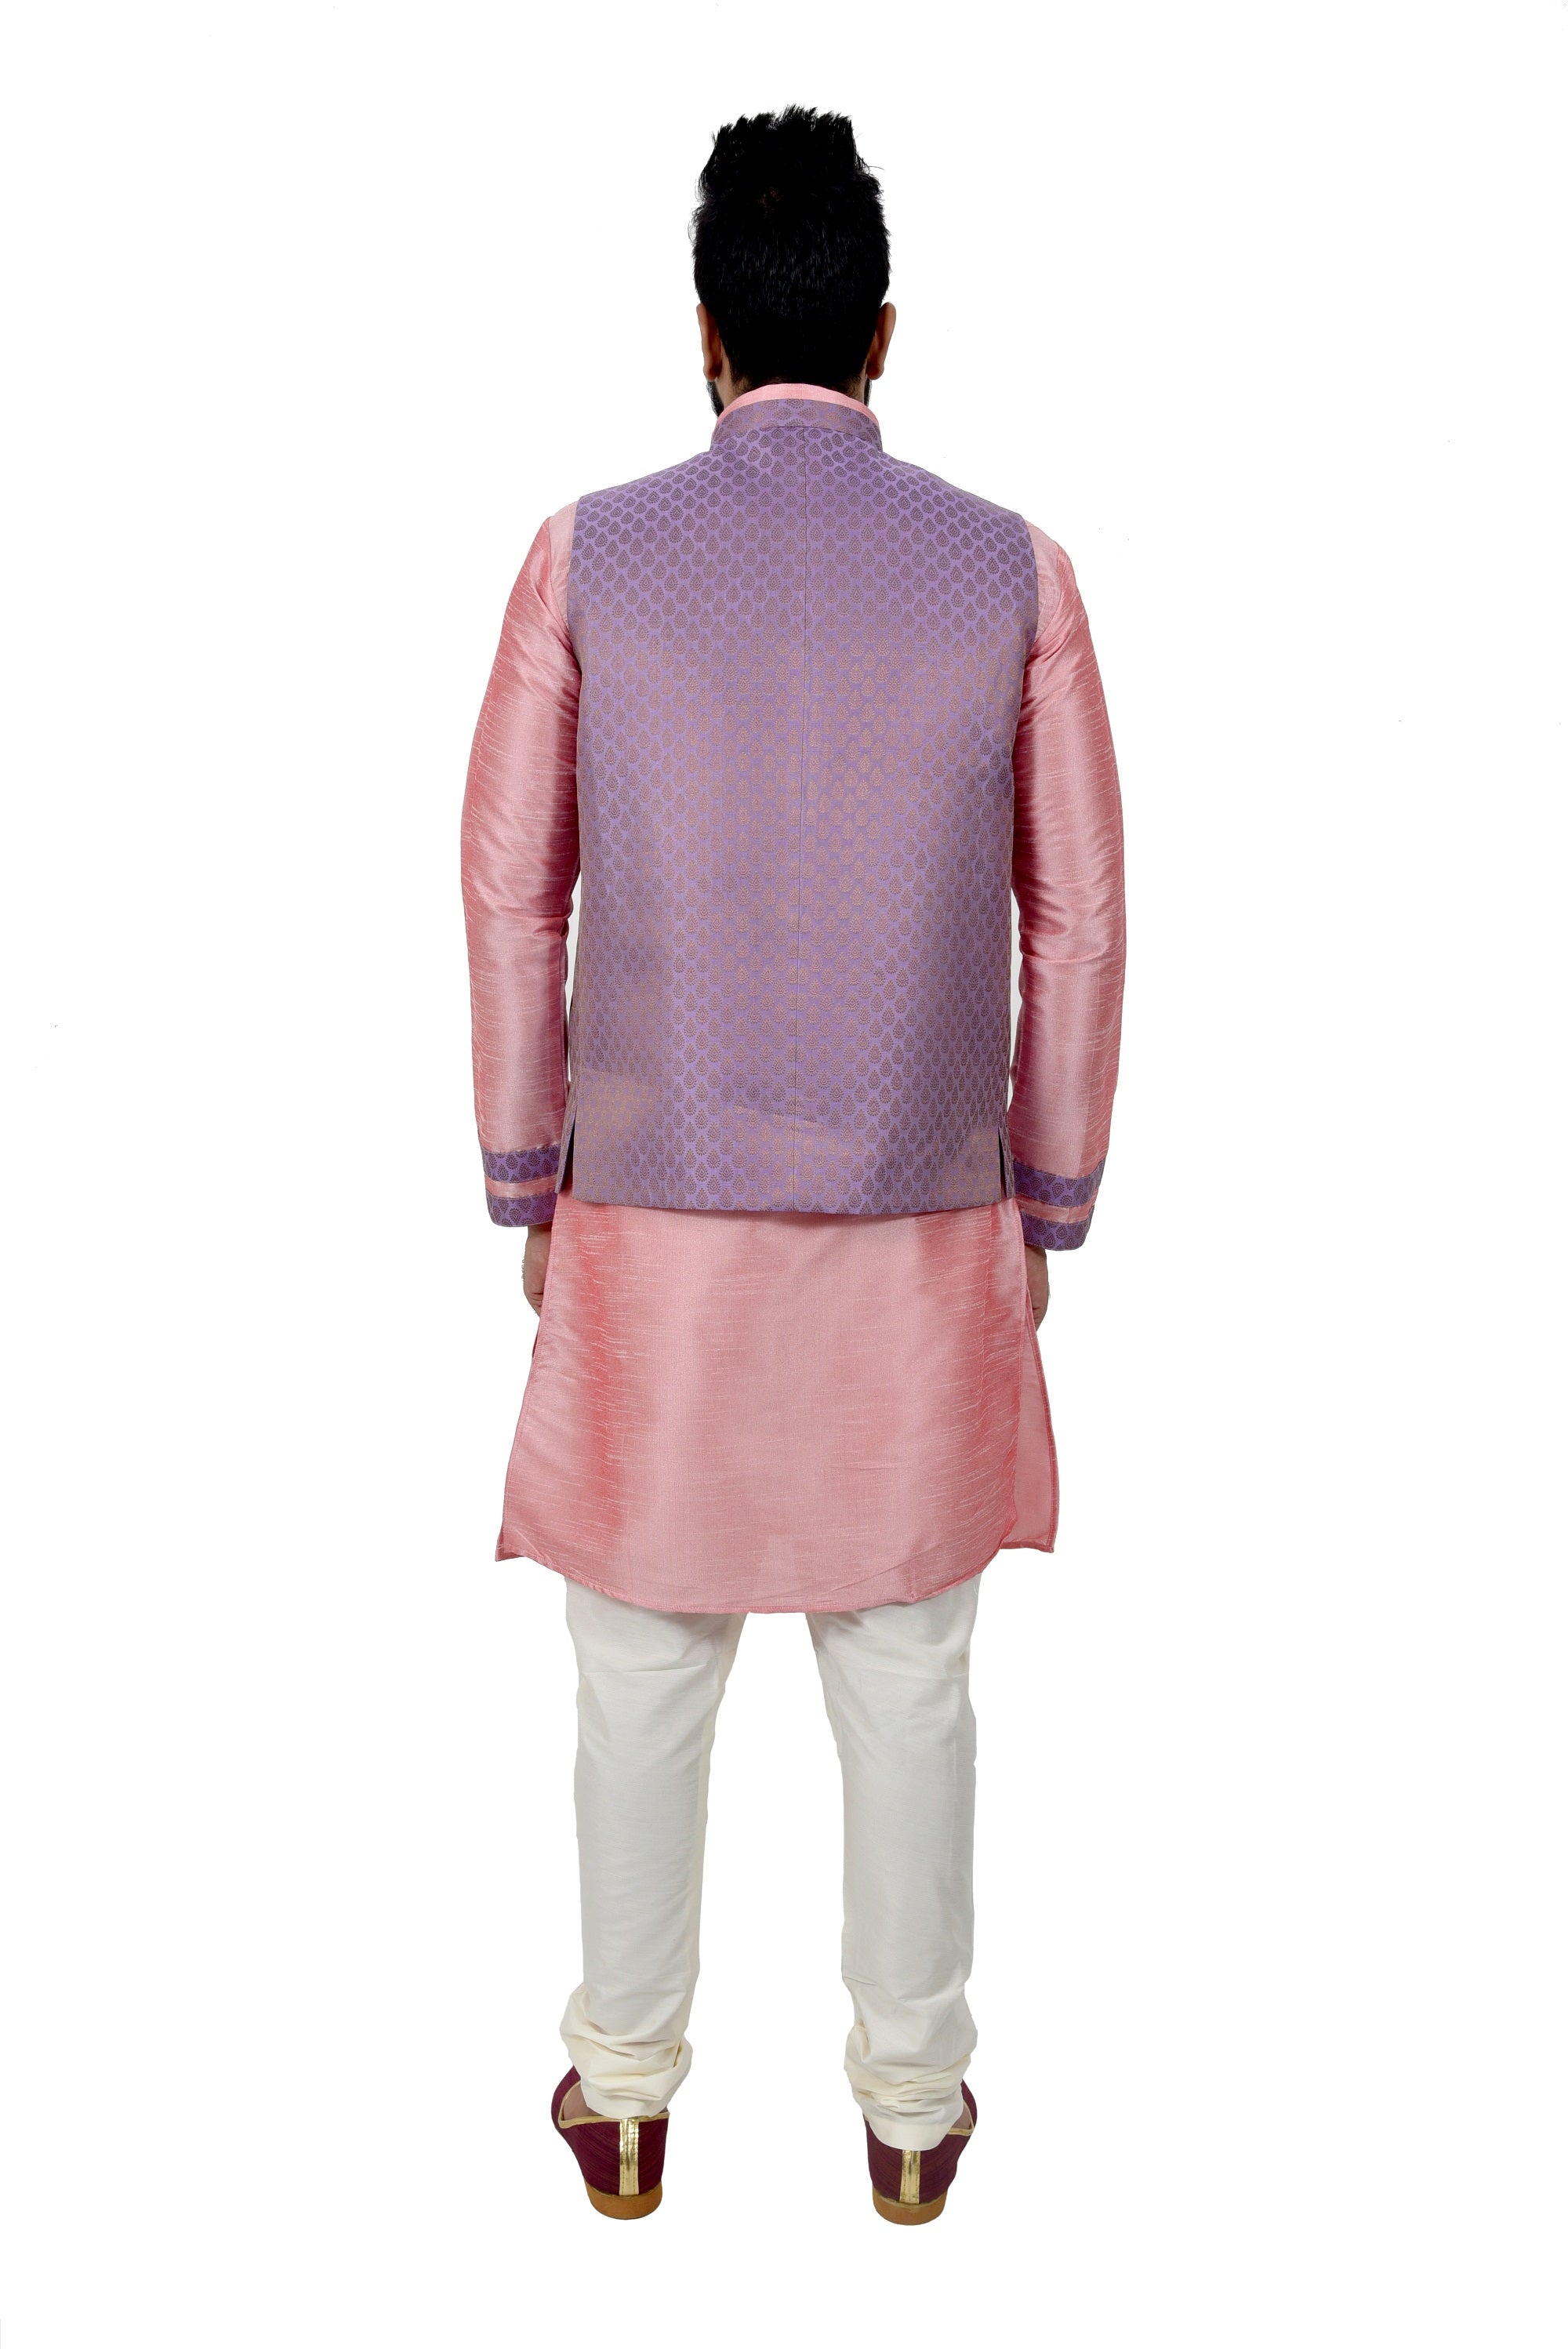 Indian Traditional Silk Cameo Pink Sherwani Kurta Set with Light